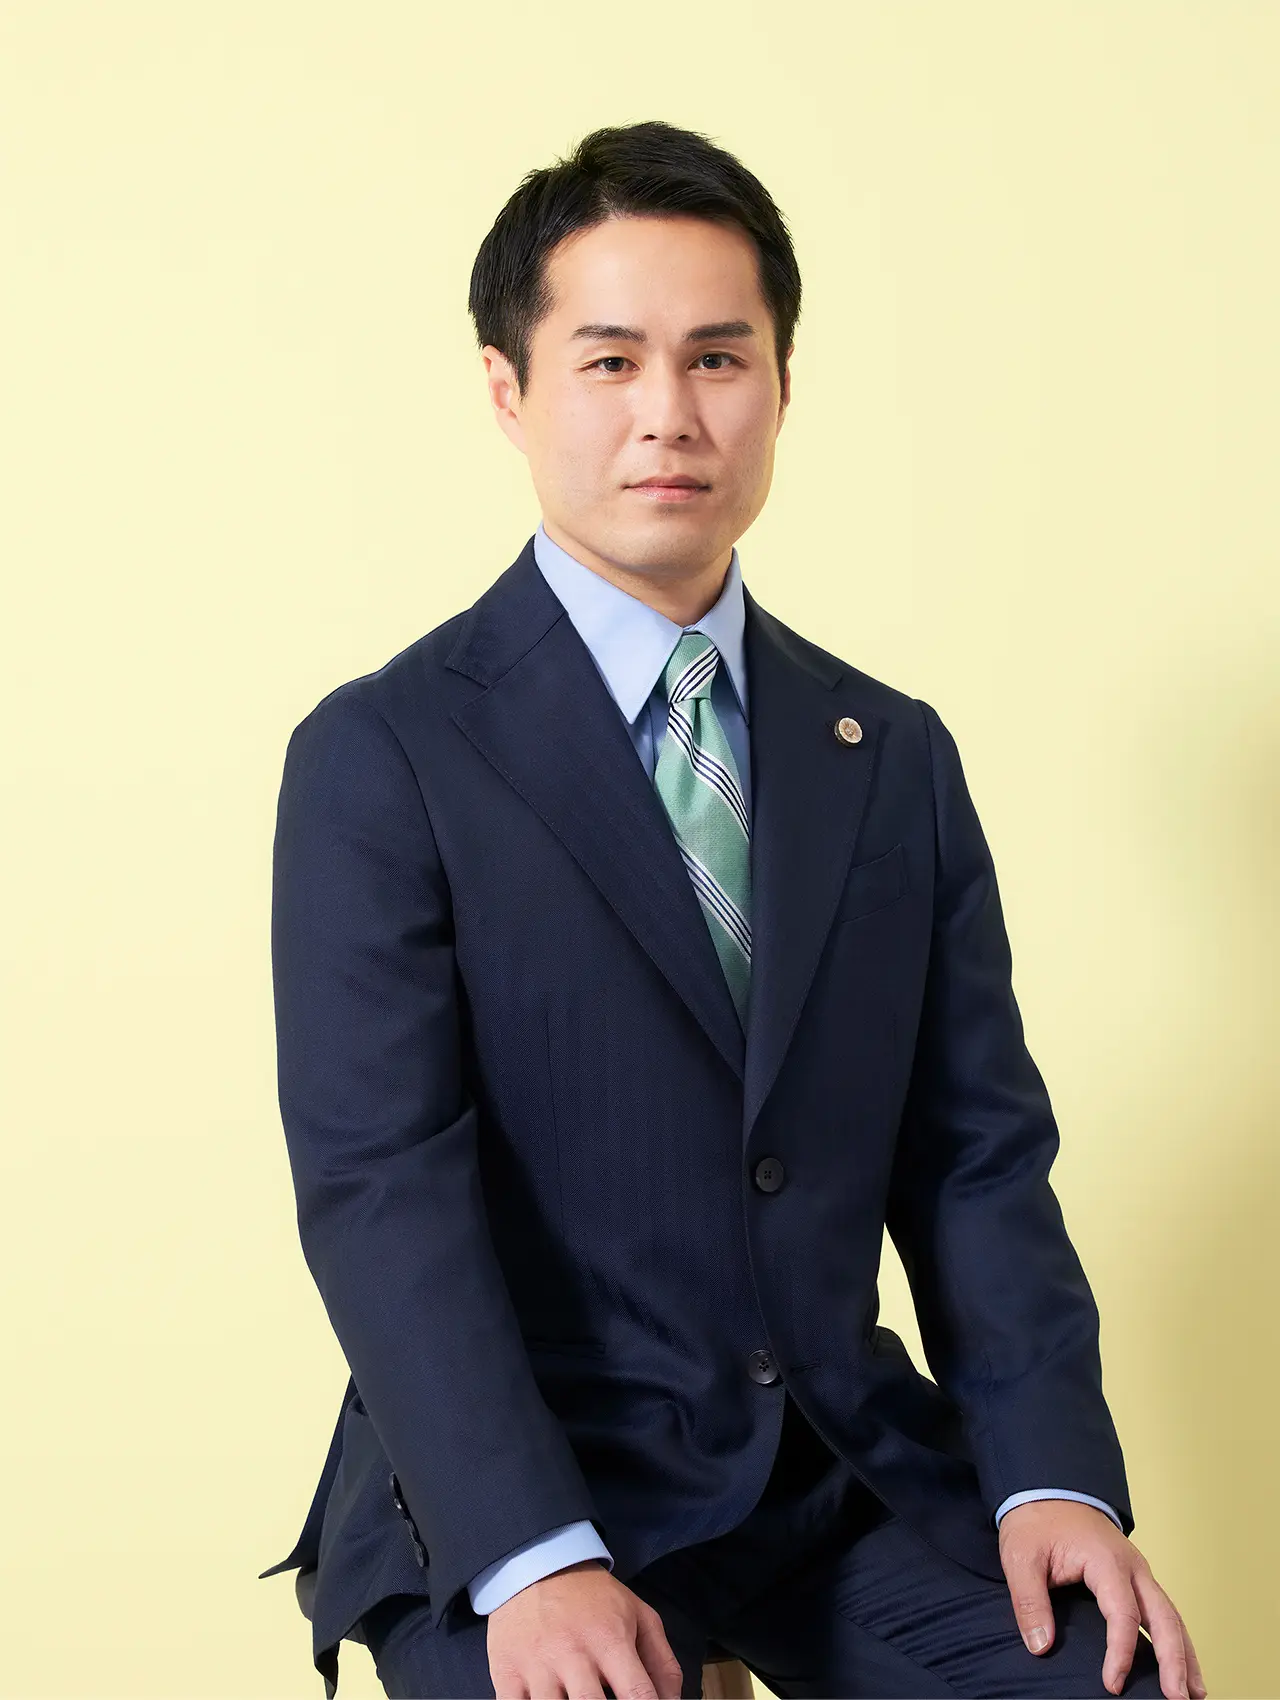 弁護士 栃木 史郎の写真